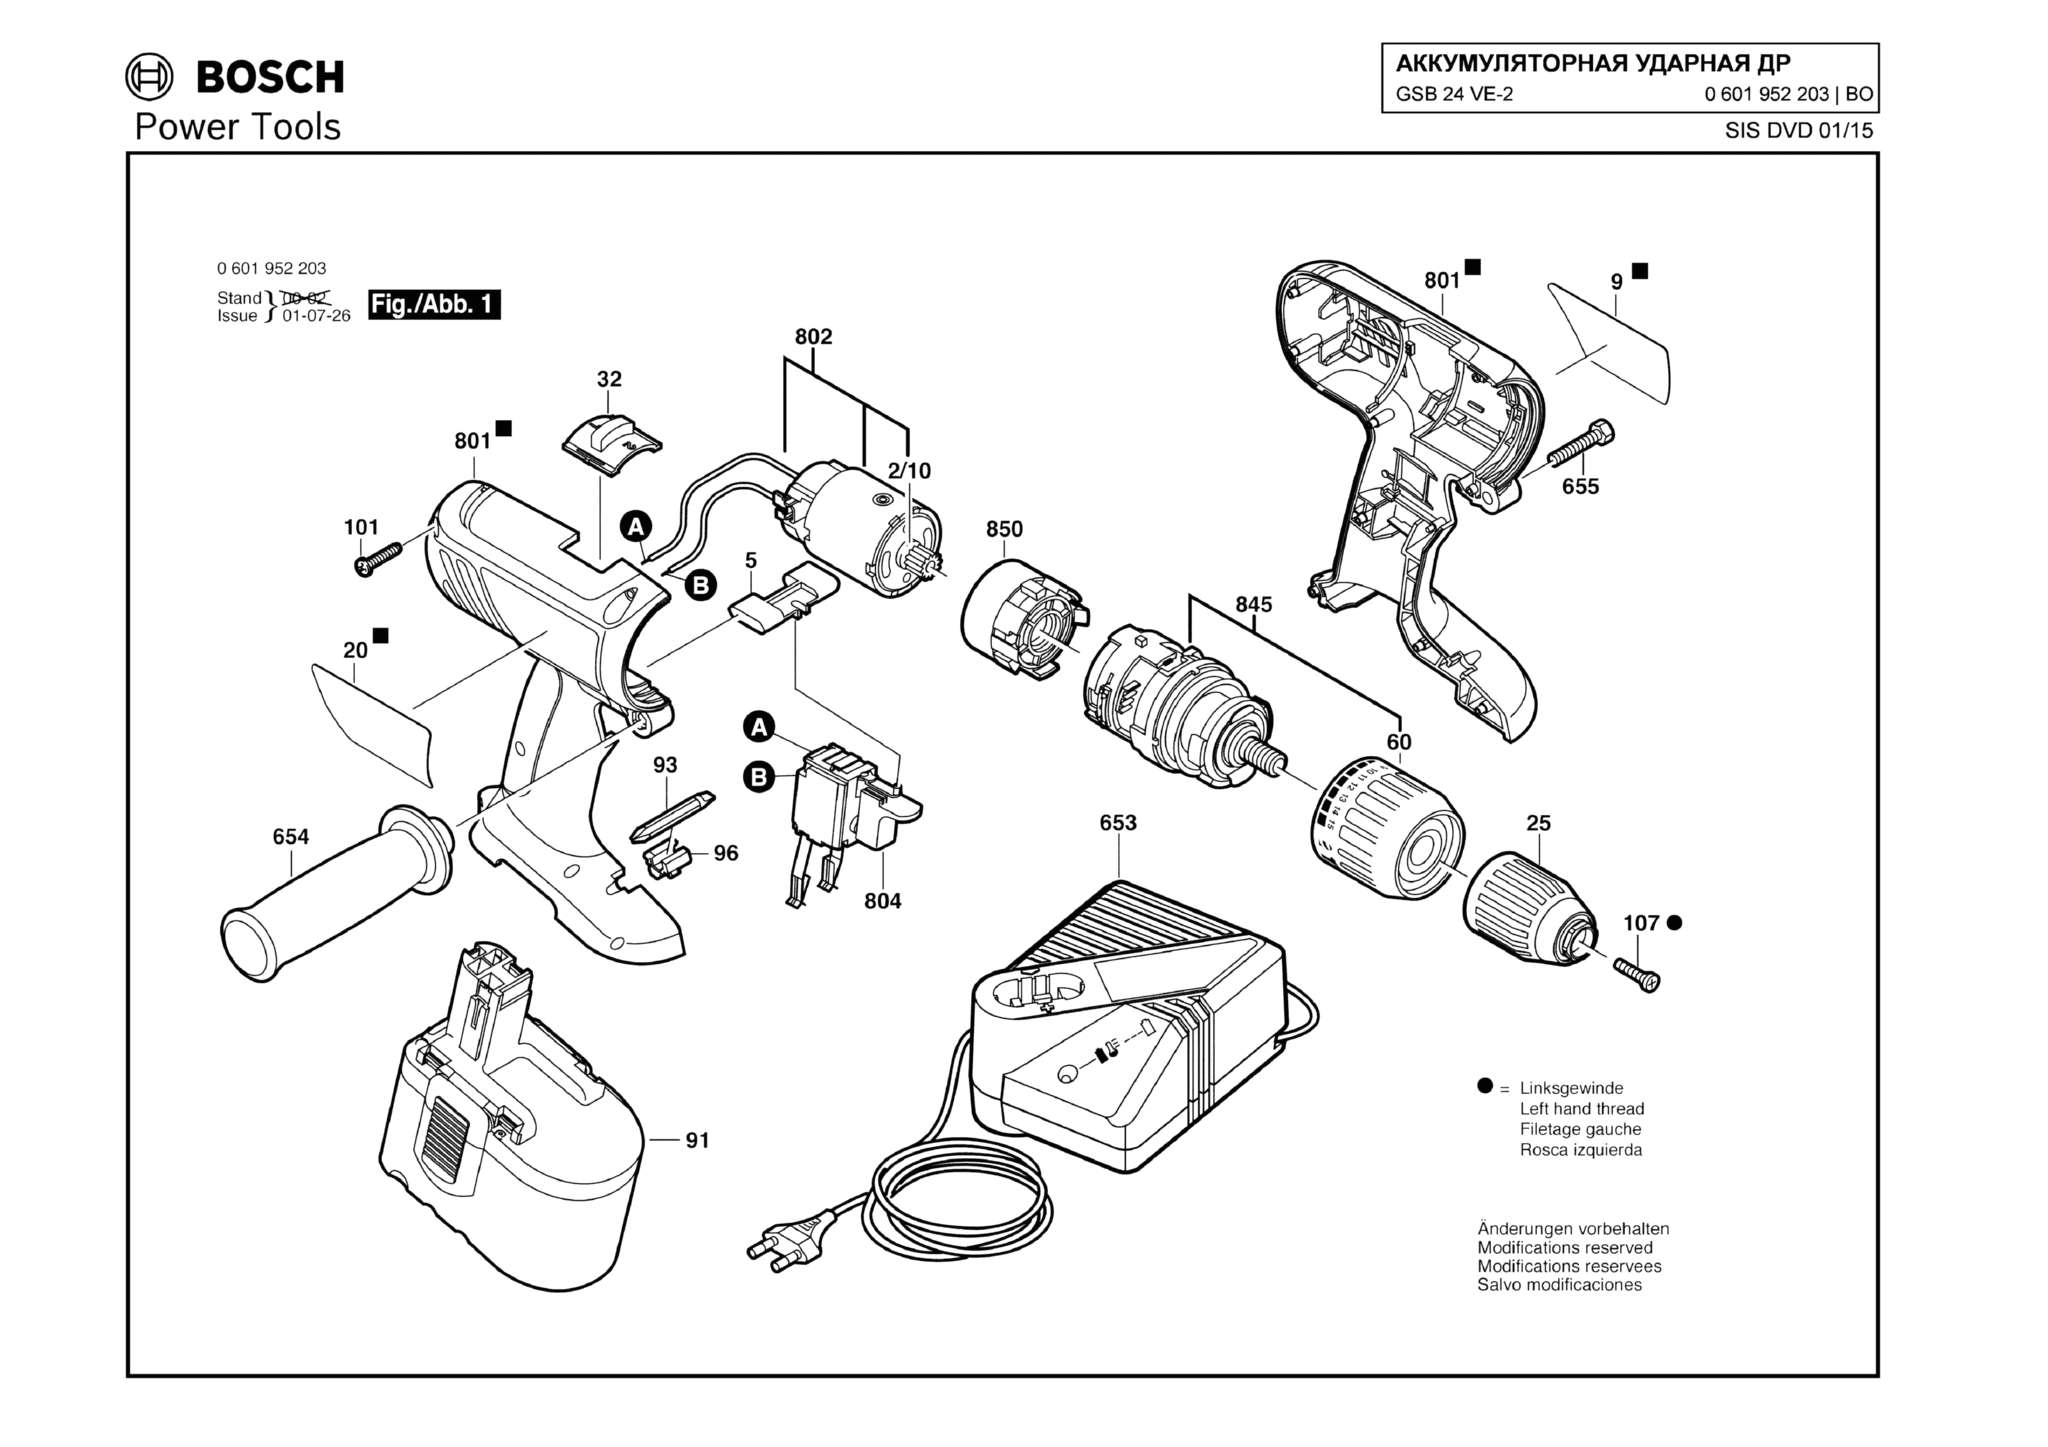 Запчасти, схема и деталировка Bosch GSB 24 VE-2 (ТИП 0601952203)